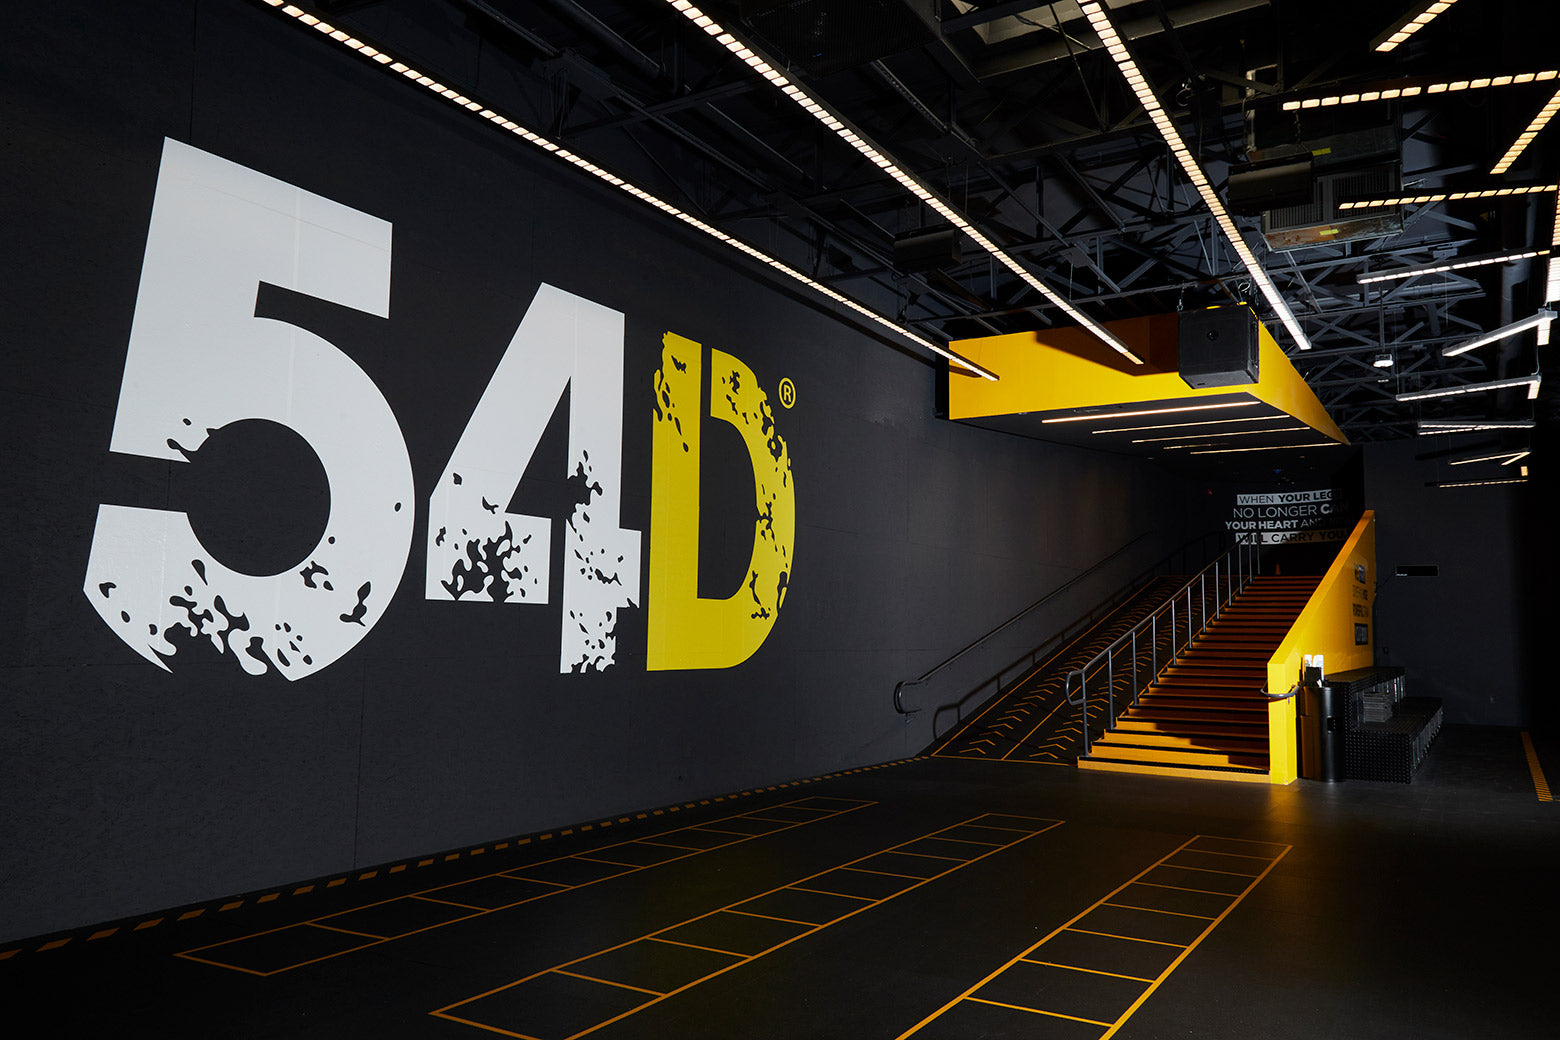 54D studio